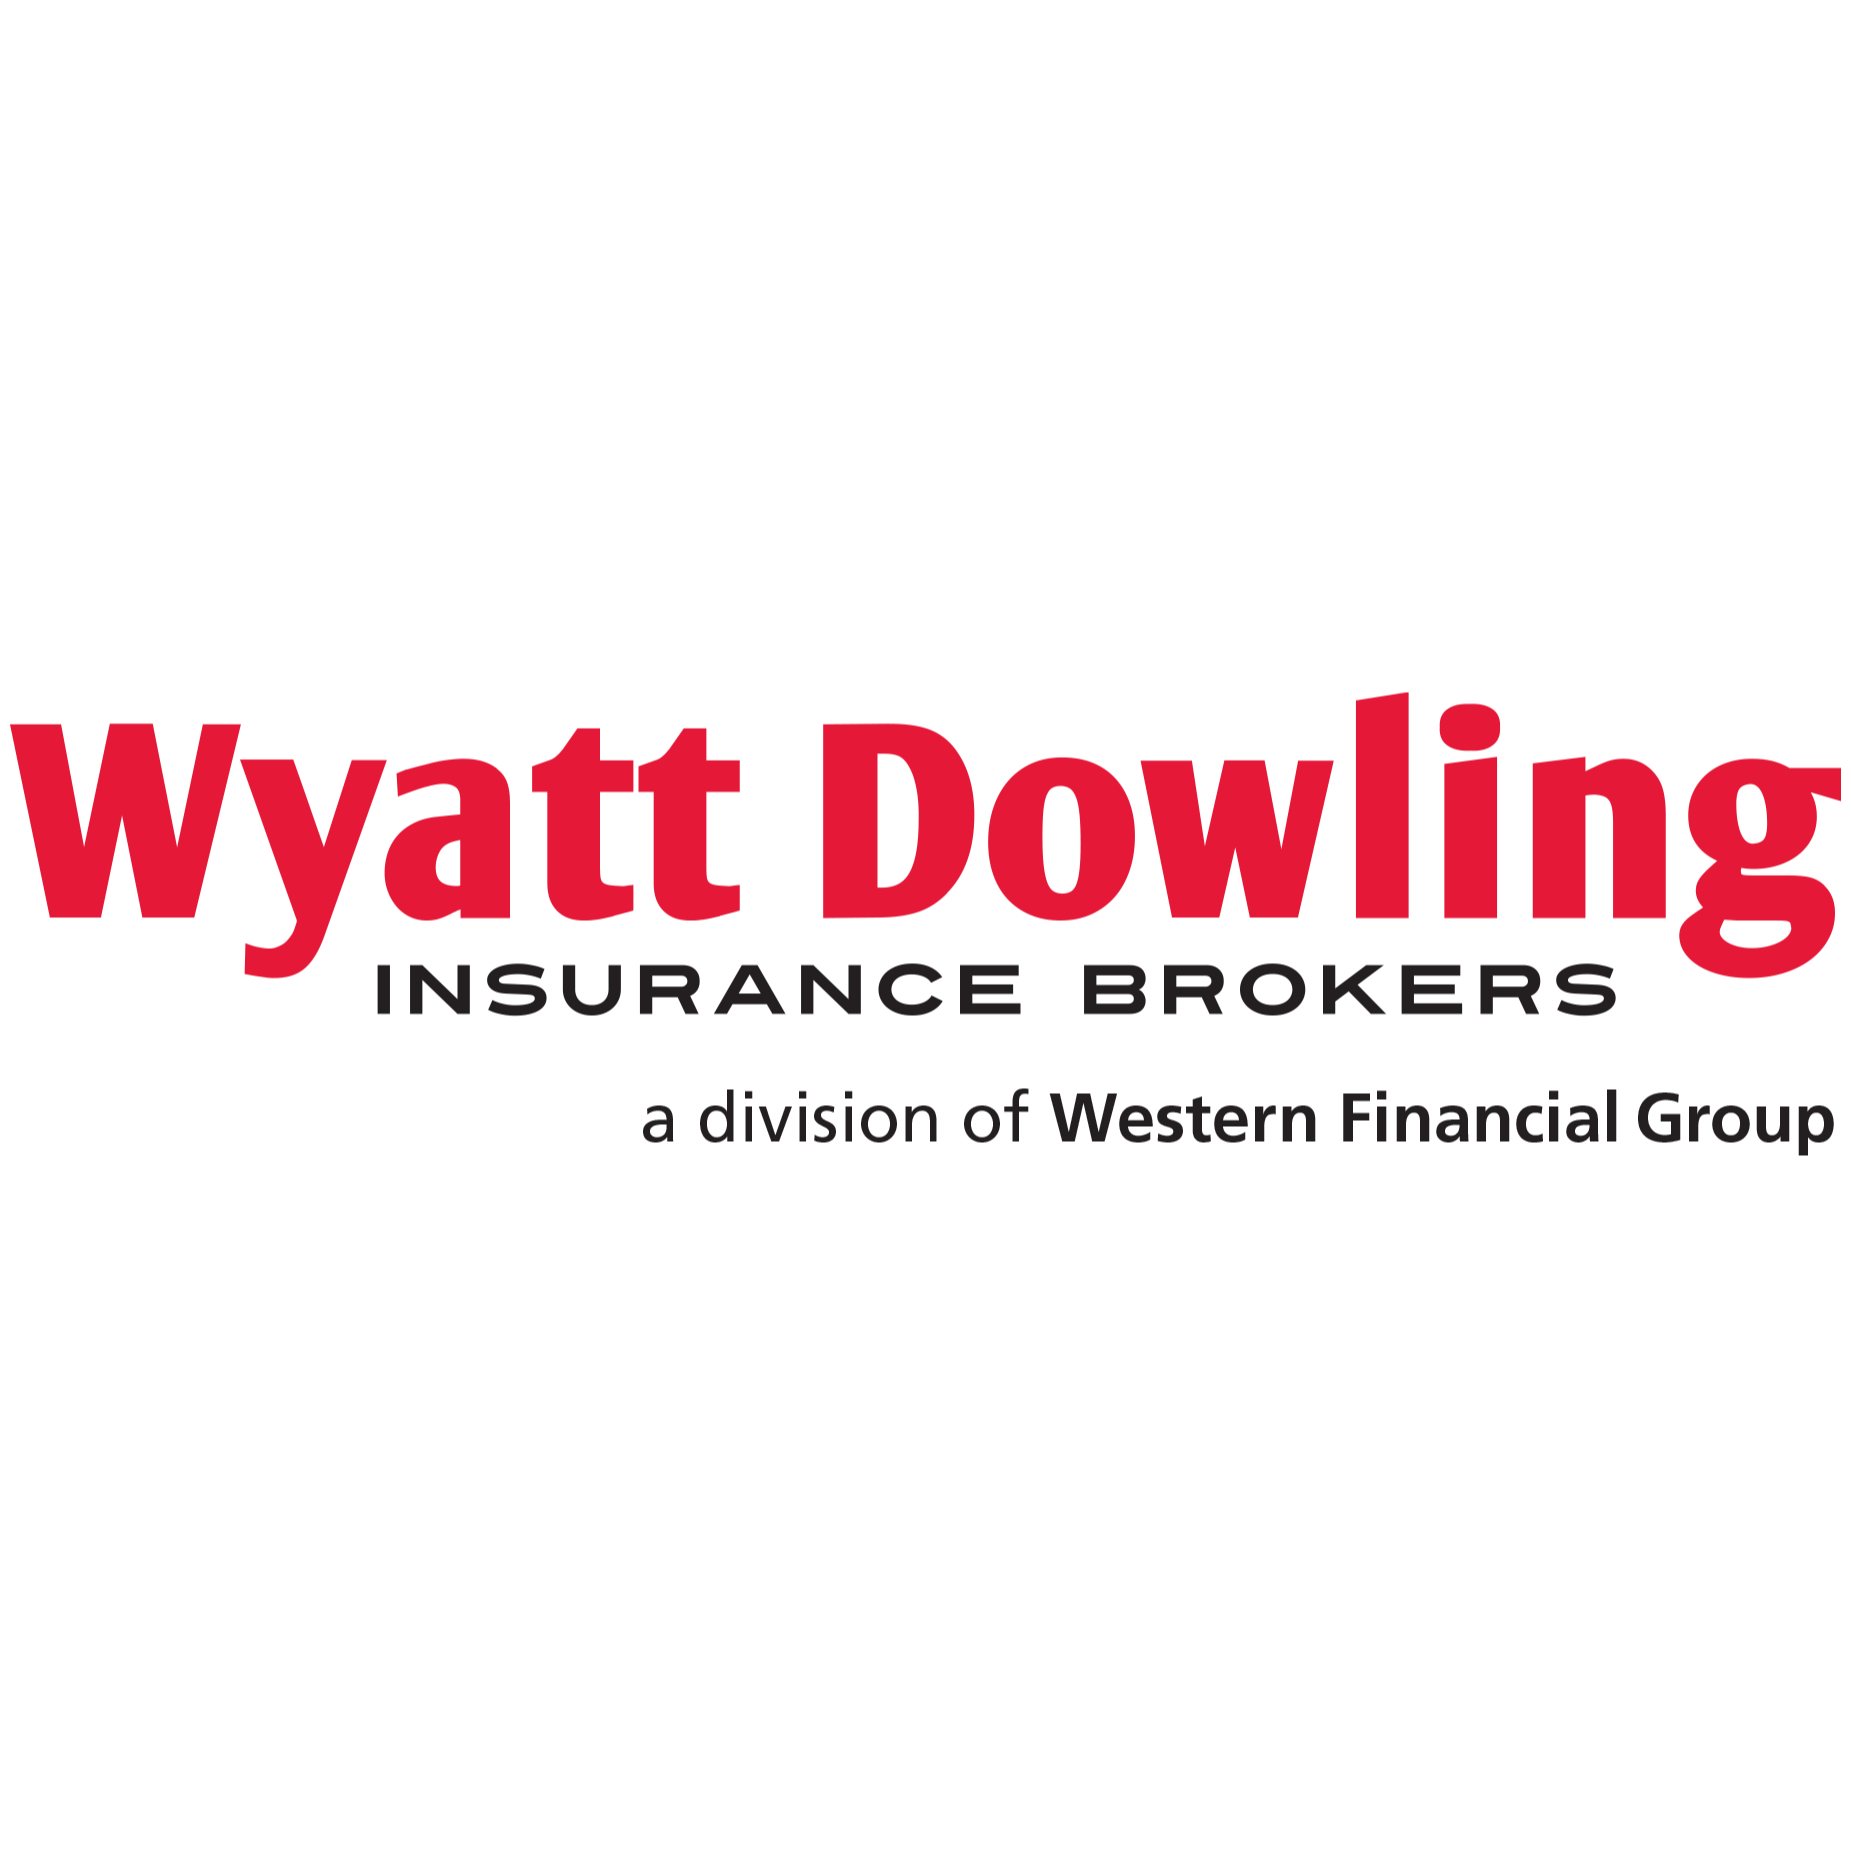 Wyatt Dowling Insurance Brokers - Assurance